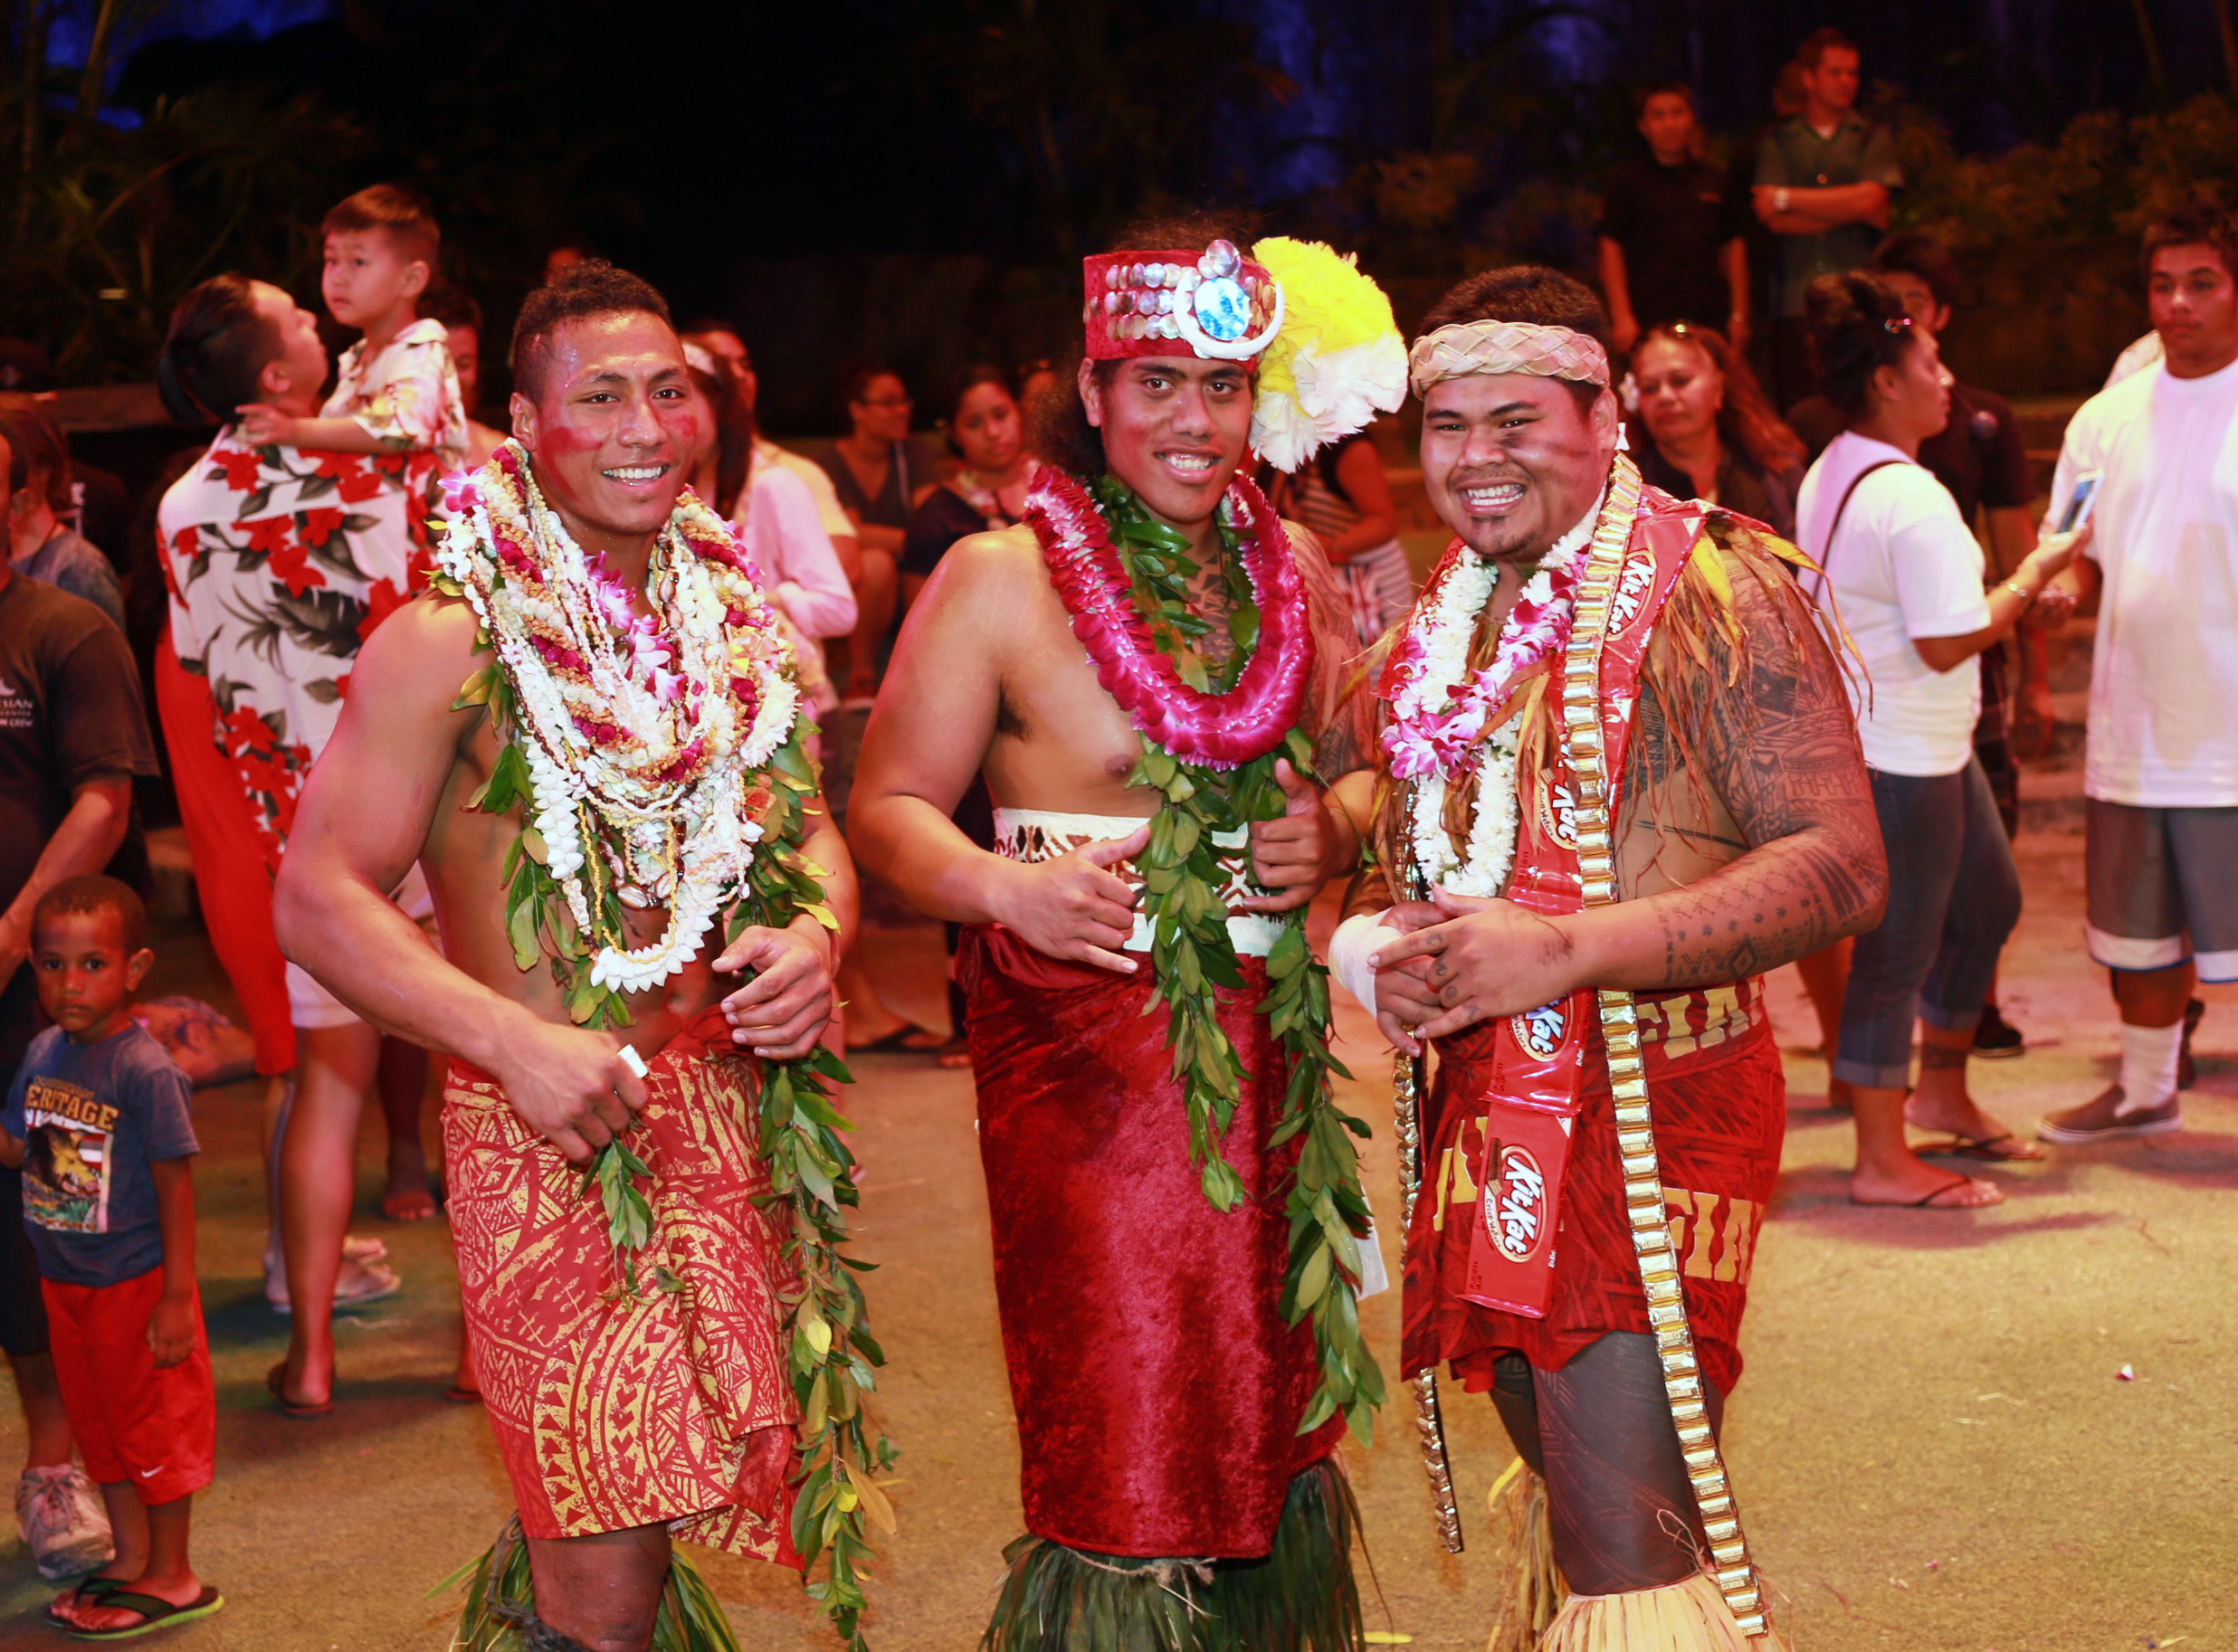 The three finalists (from L-R) Falaniko Penesa, 23 of Samoa; Via Tiumalu, Jr., 22 of Orlando; Malo Matau, Jr., 20 of Laie, HI